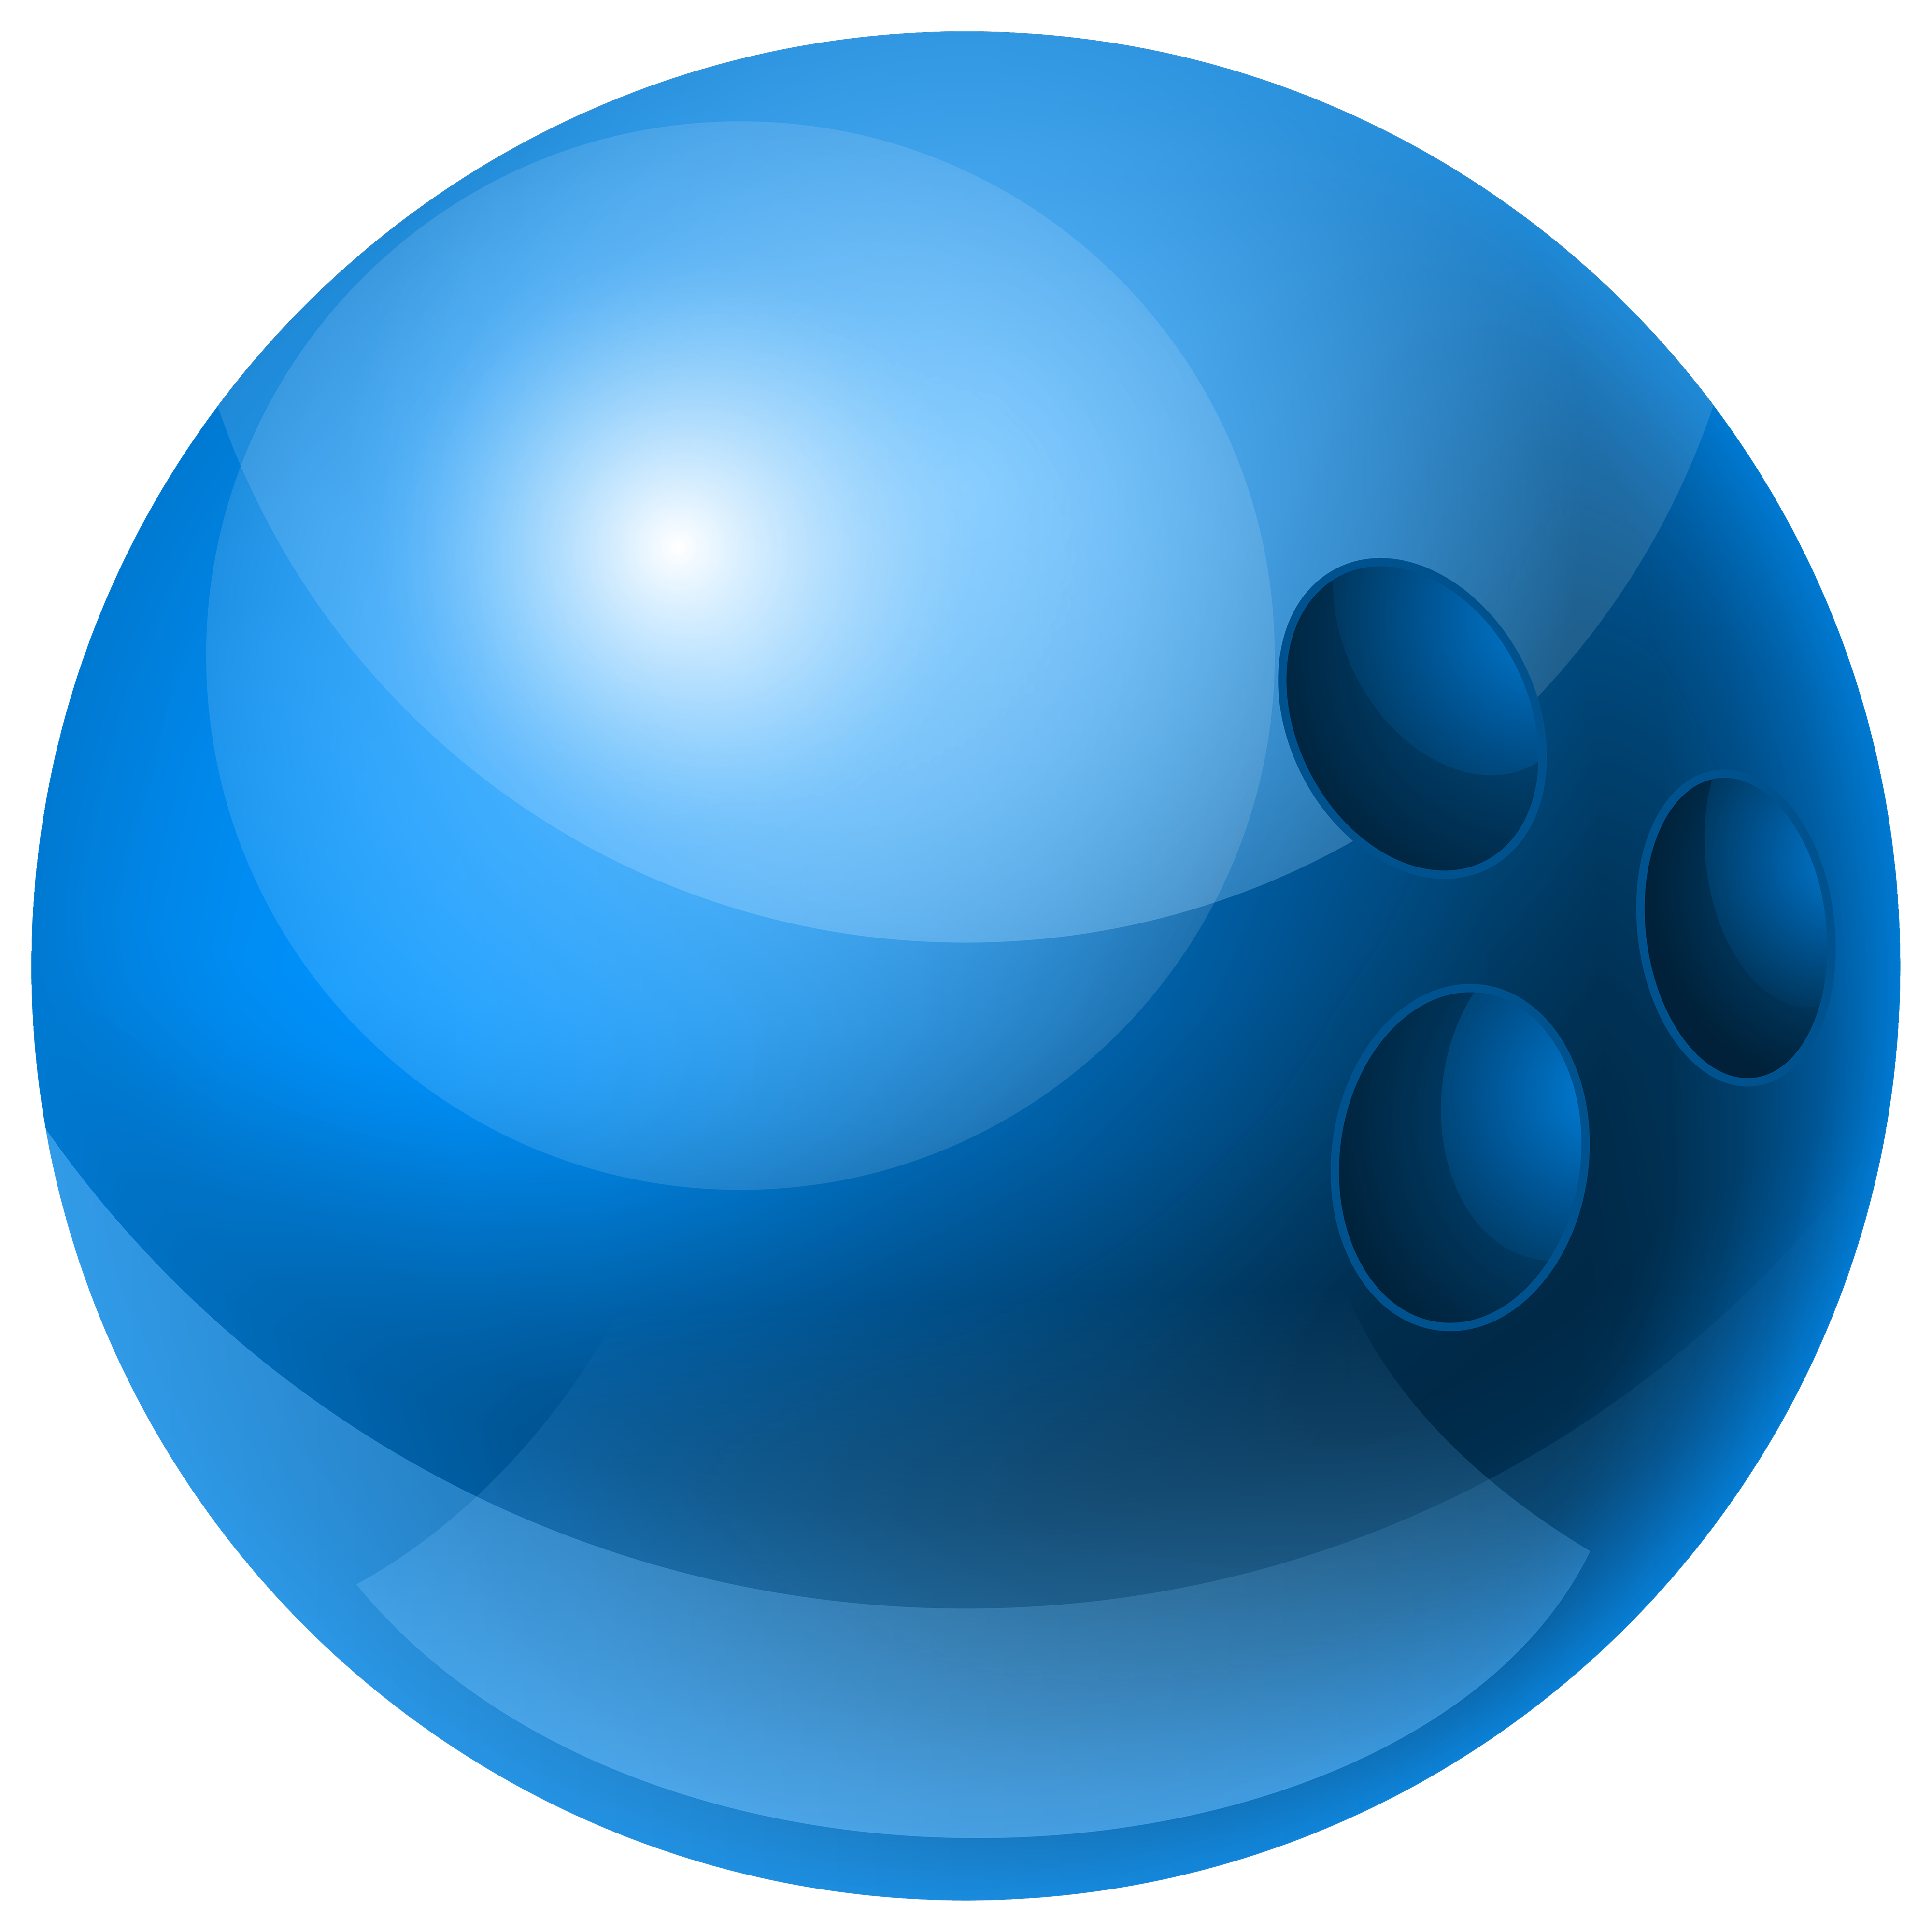 Blue Bowling Ball PNG Clipart - Best WEB Clipart